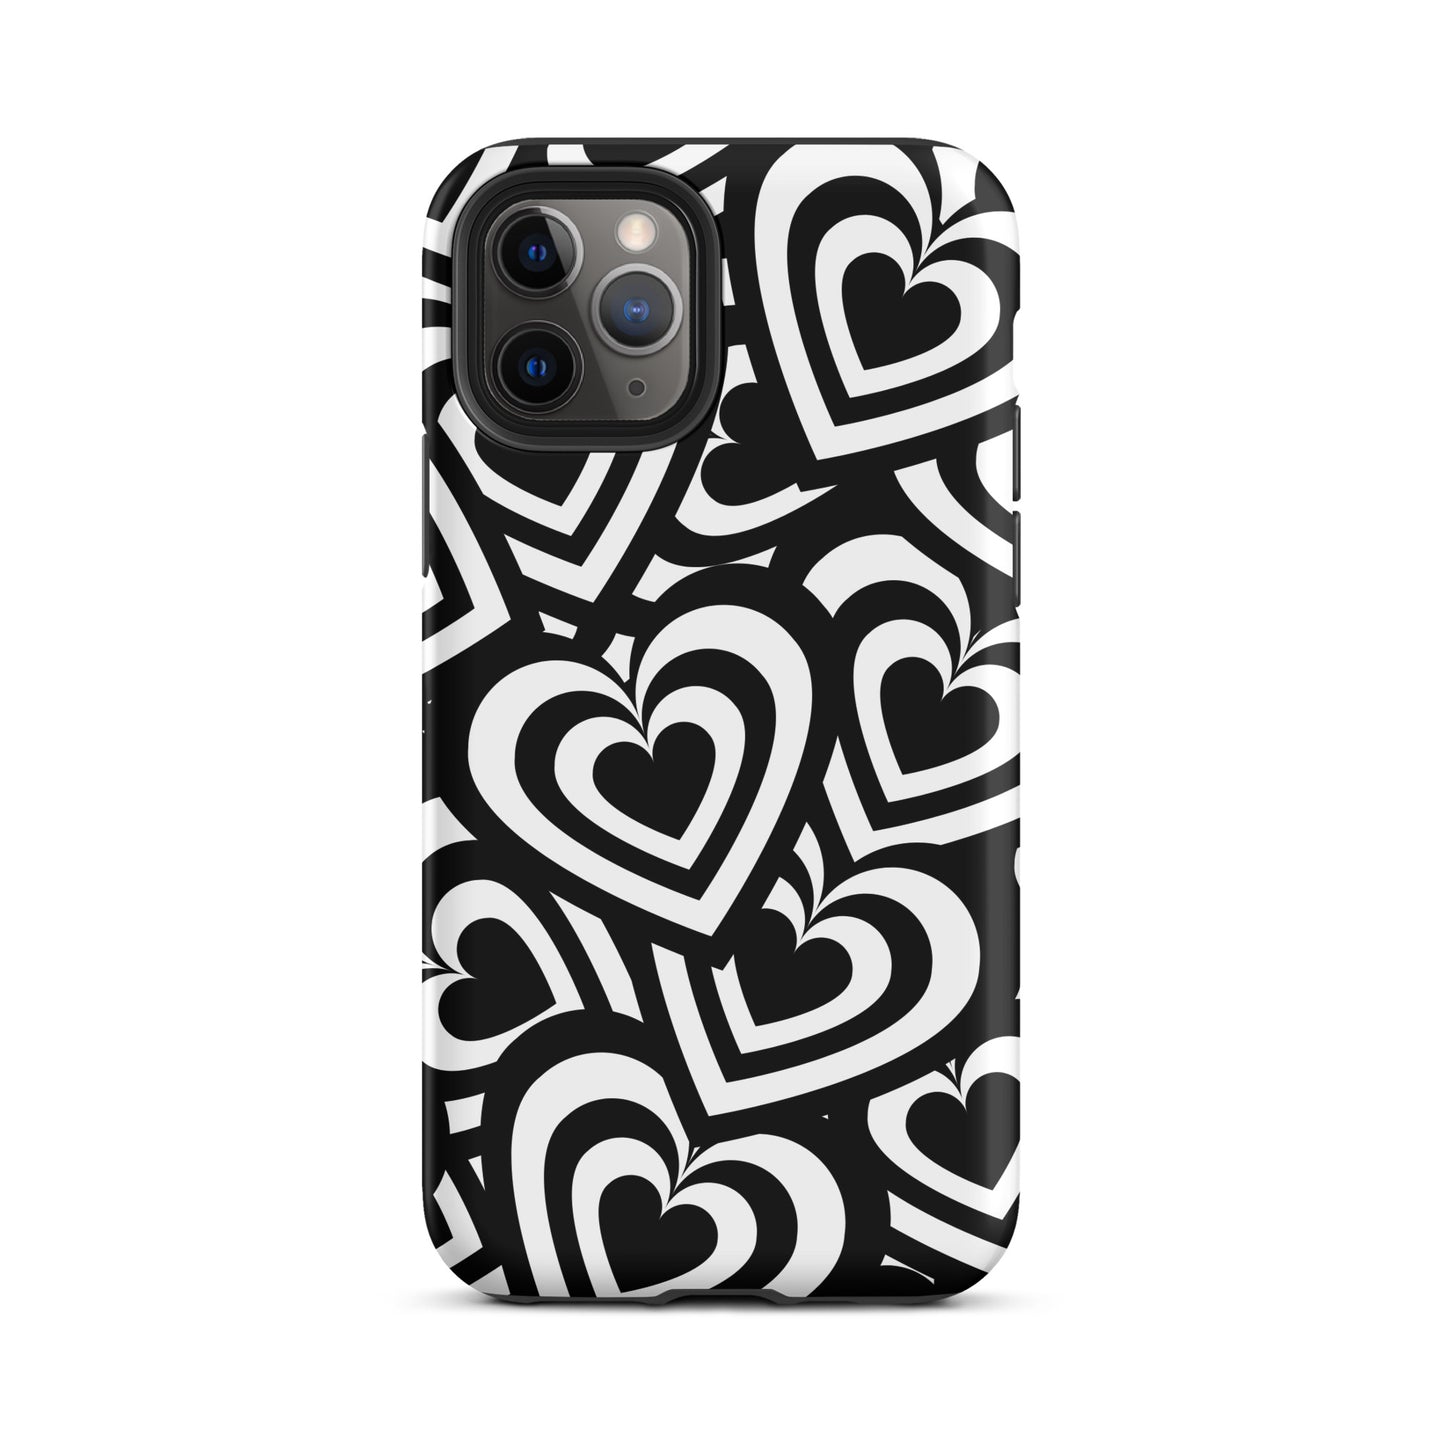 Black & White Hearts iPhone Case iPhone 11 Pro Matte